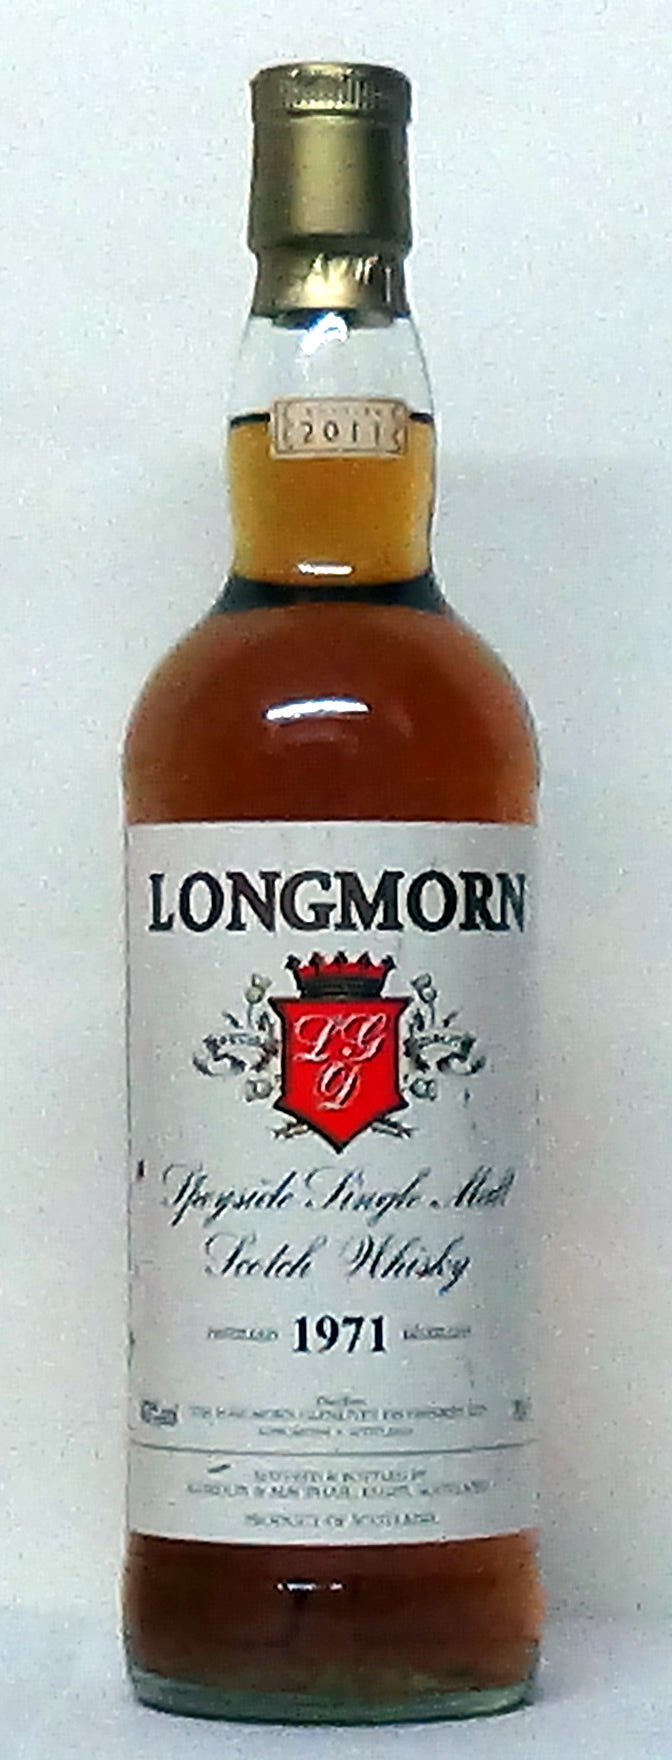 1971 Longmorn Speyside 40 year old. Bottled in 2011 by Gordon & Macpha